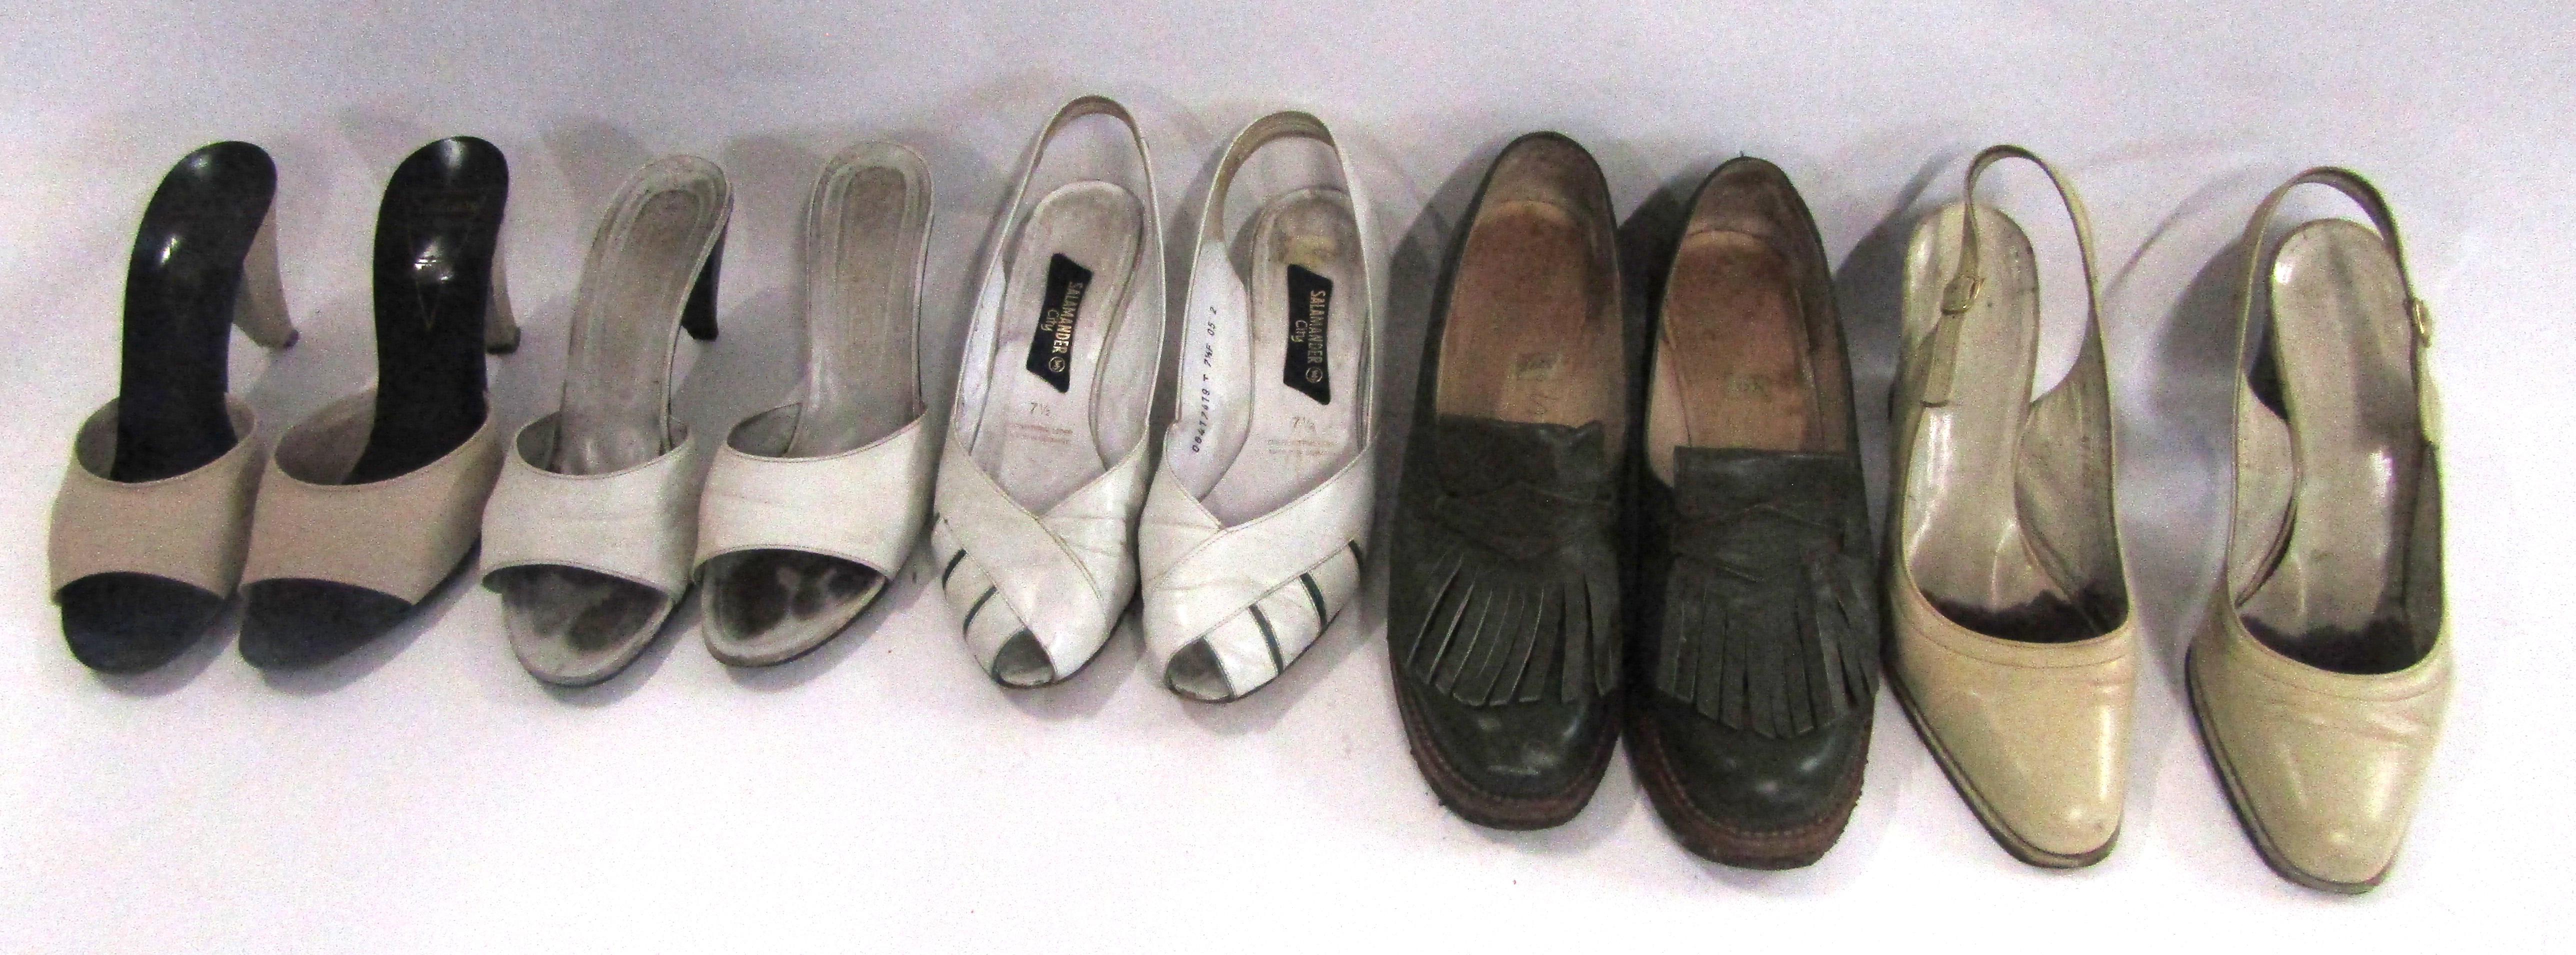 Eleven pairs of ladies shoes, various manufactures including Seducta, Salamander, Cyrillus etc, - Image 2 of 2